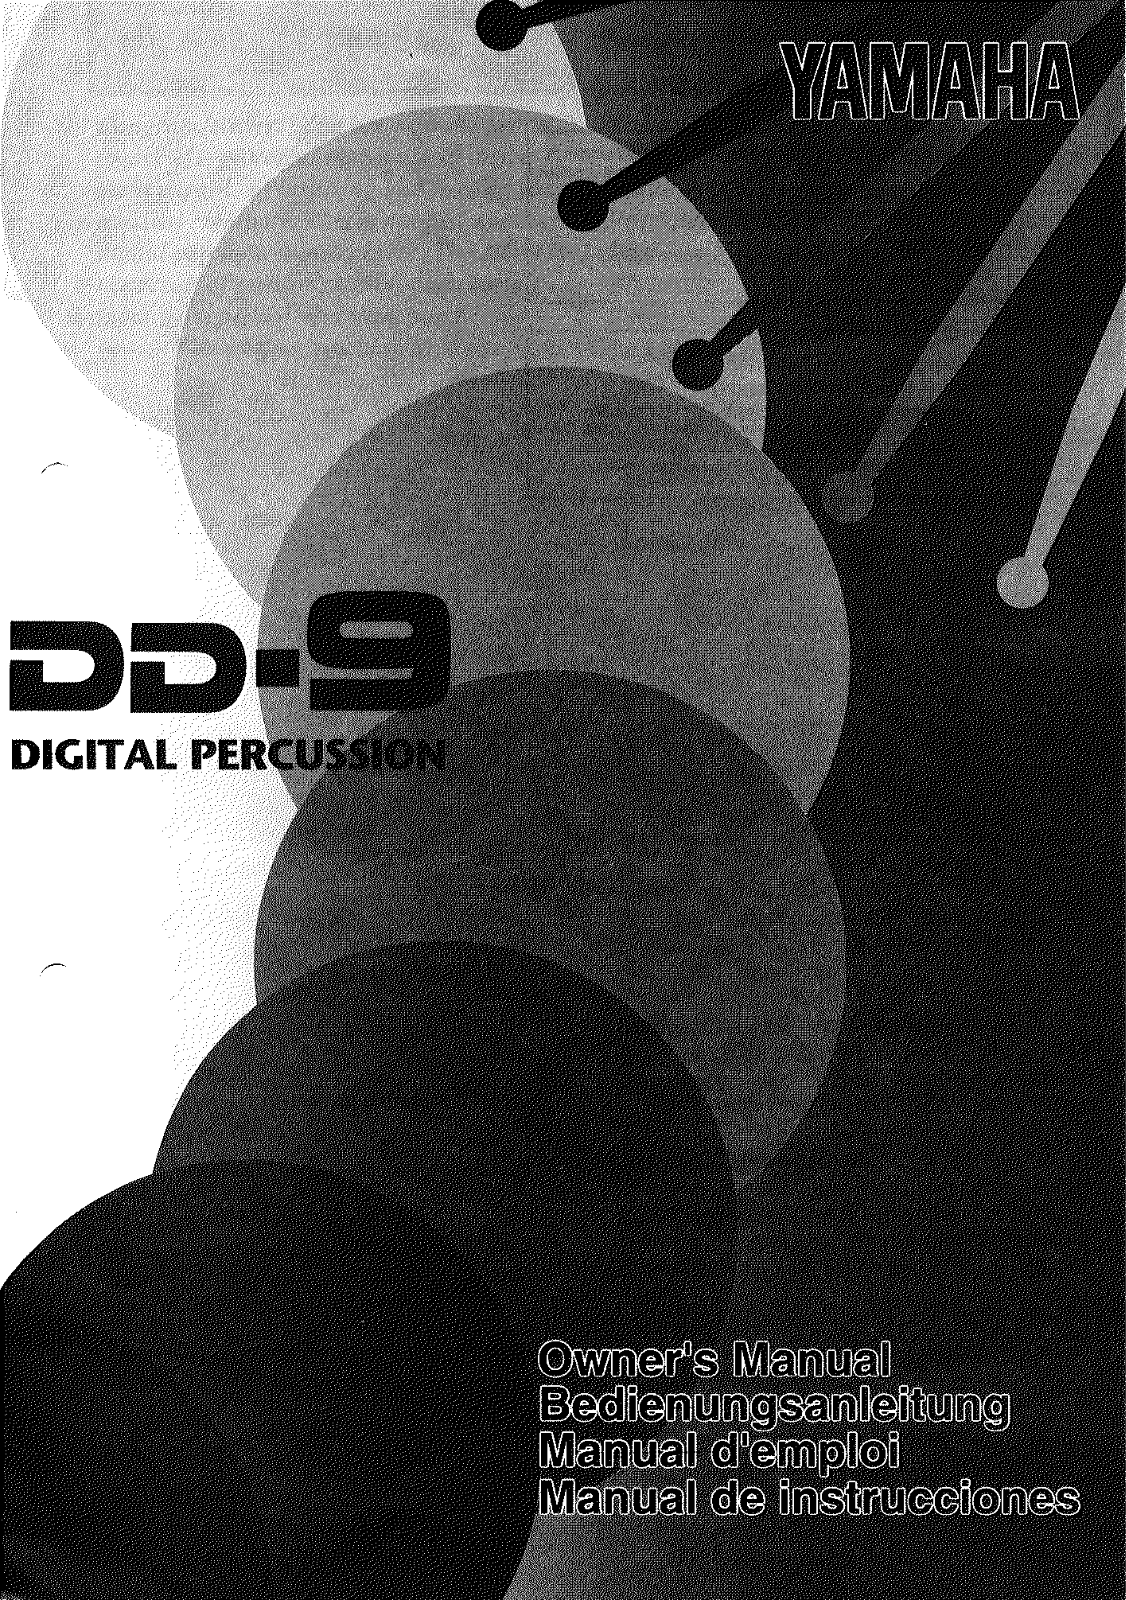 Yamaha DD-9 User Manual